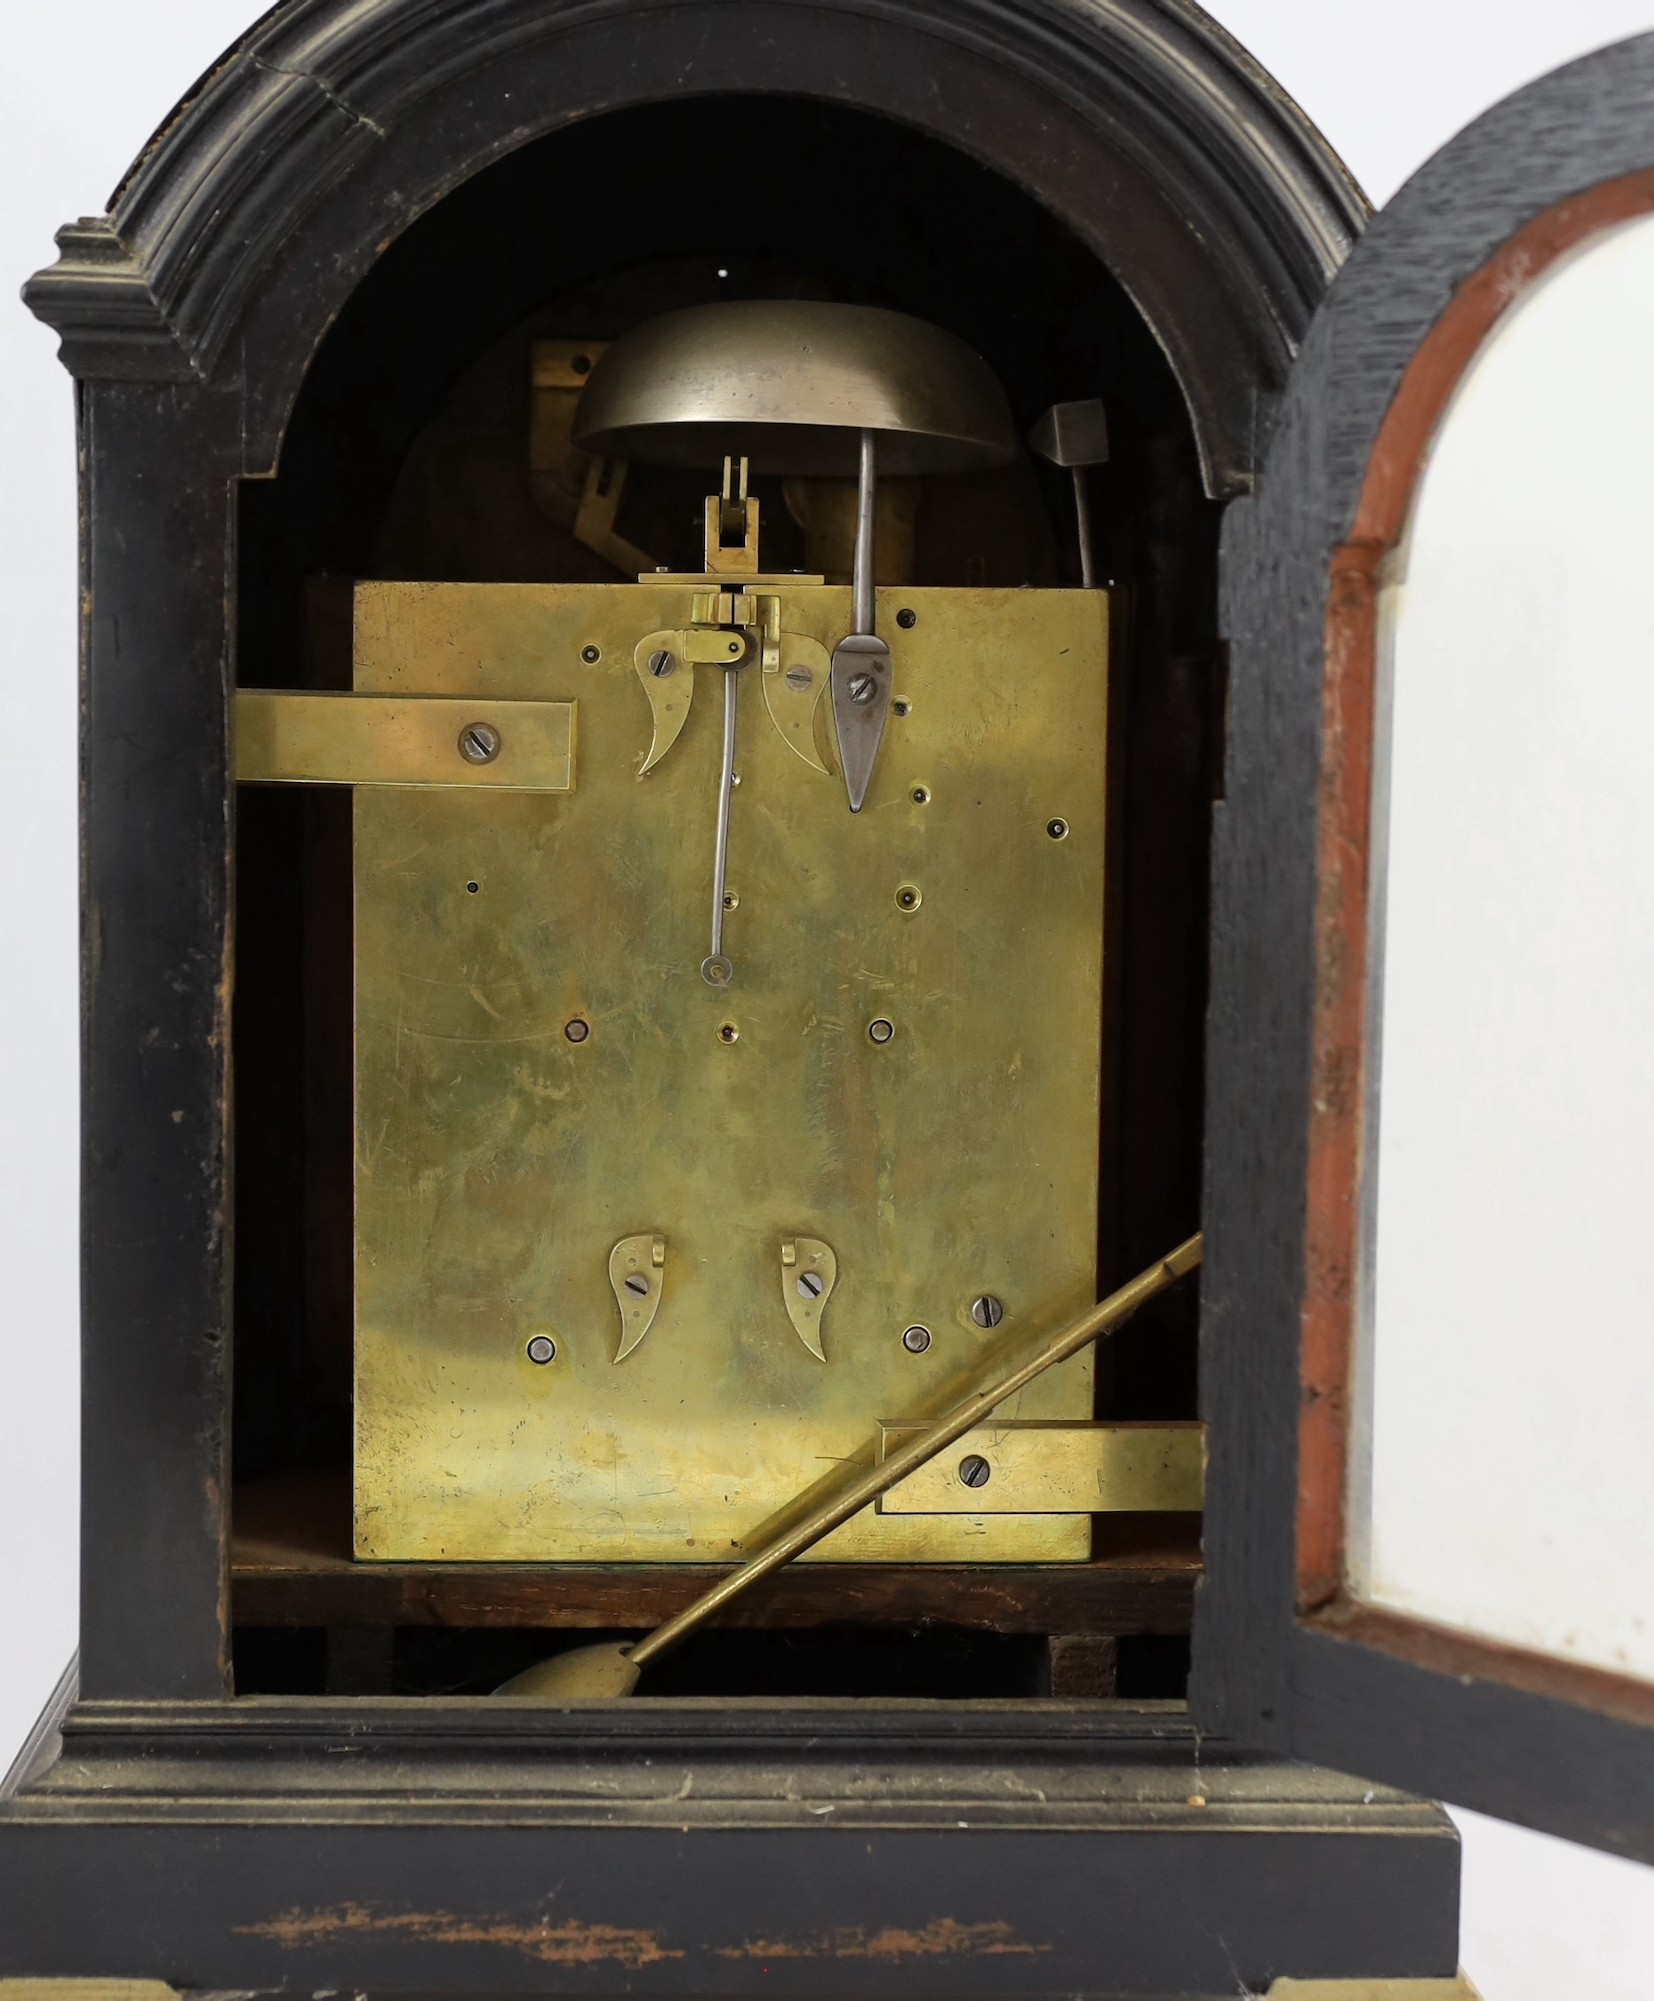 Stuart of Newcastle. A George III ebonised bracket clock, width 28cm depth 20cm height 41cm